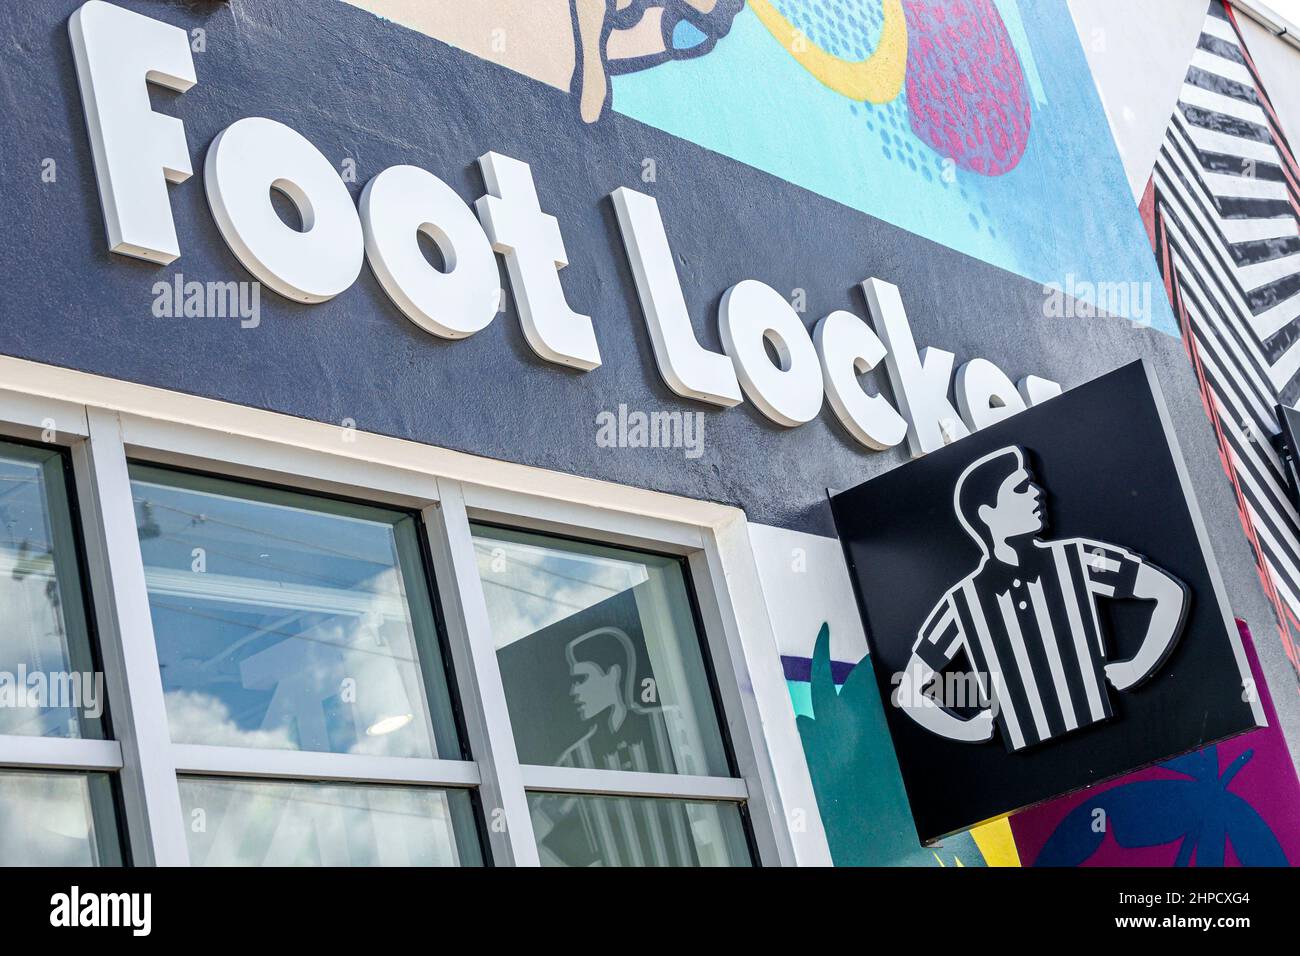 Miami Florida Wynwood Art District Foot Locker athletic shoes shopping logo outside exterior Stock Photo